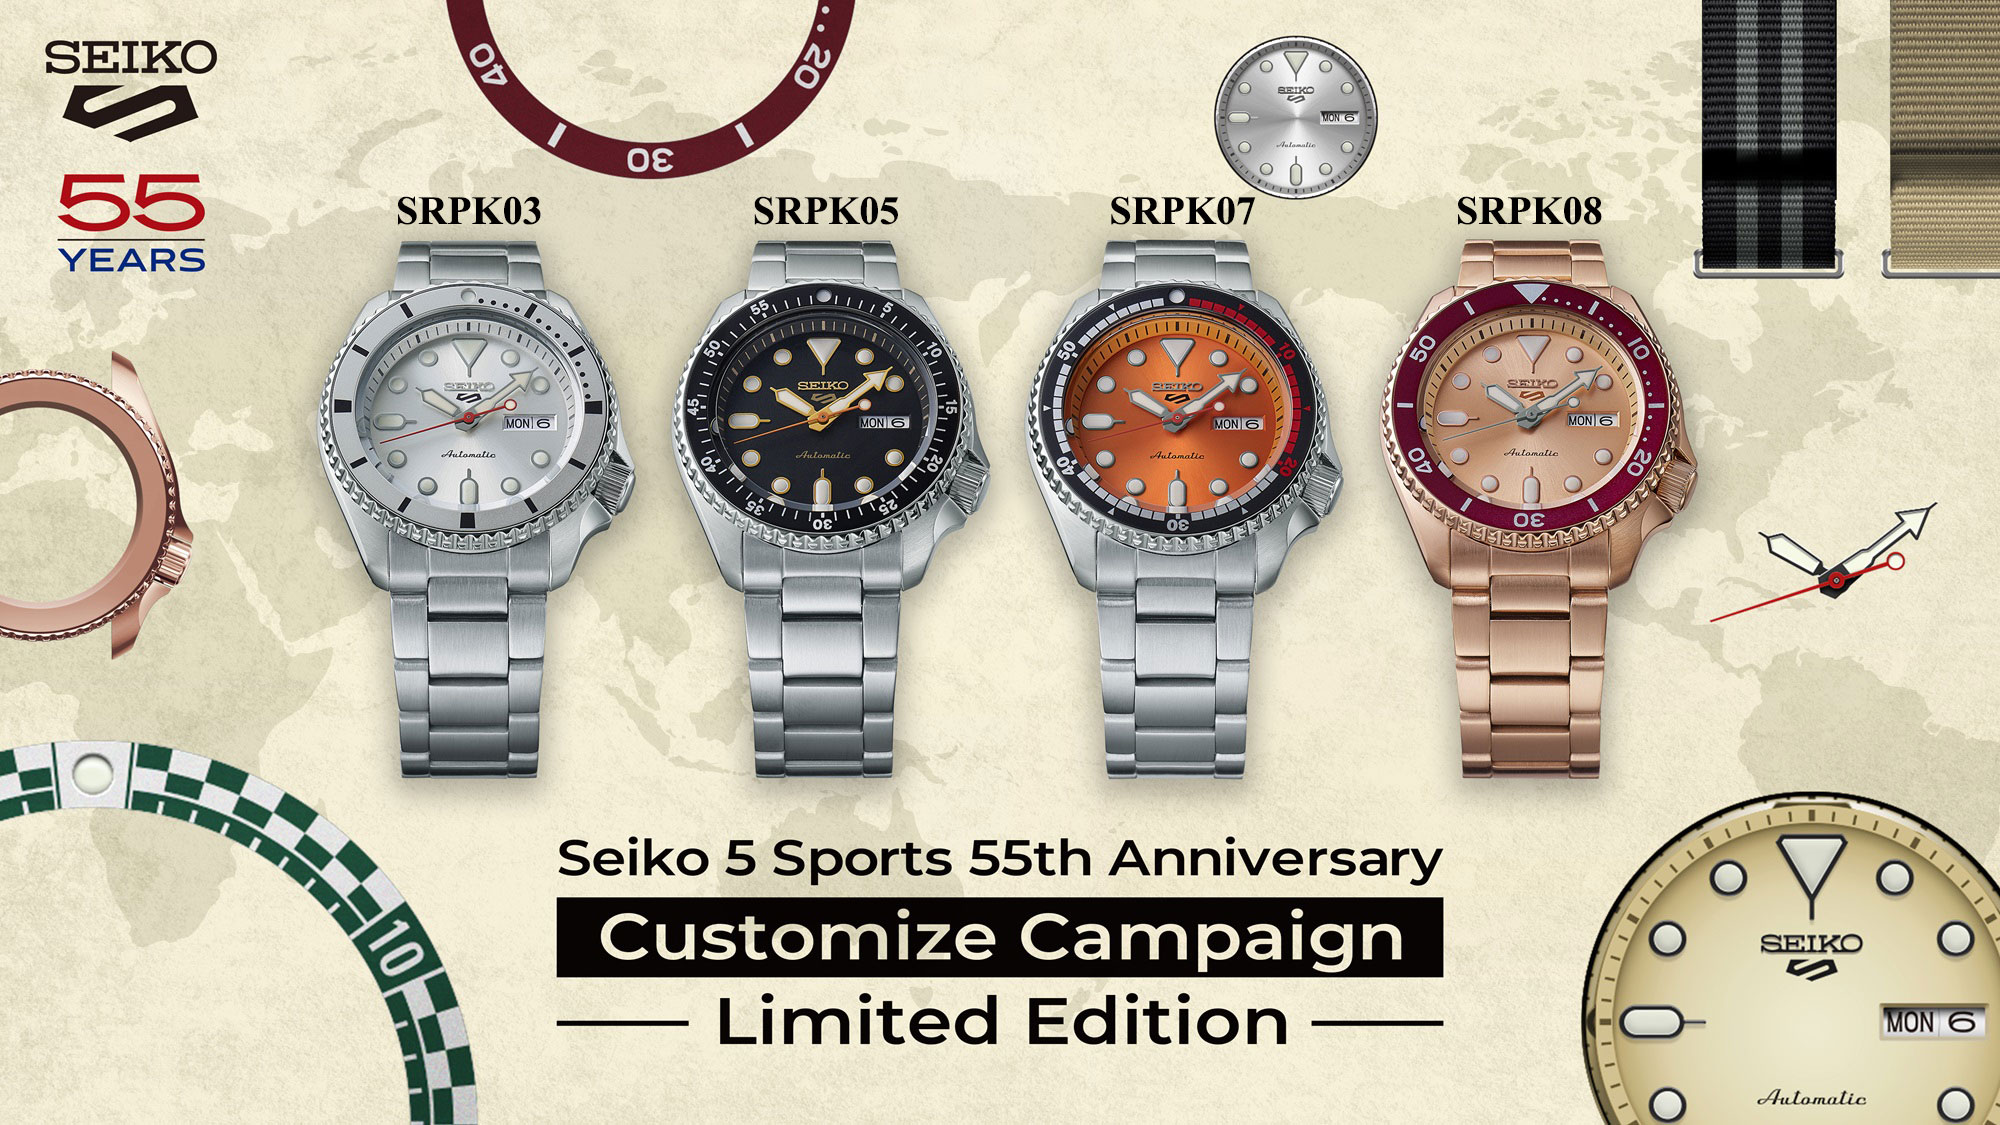 Seiko 5 Sports Customize Campaign